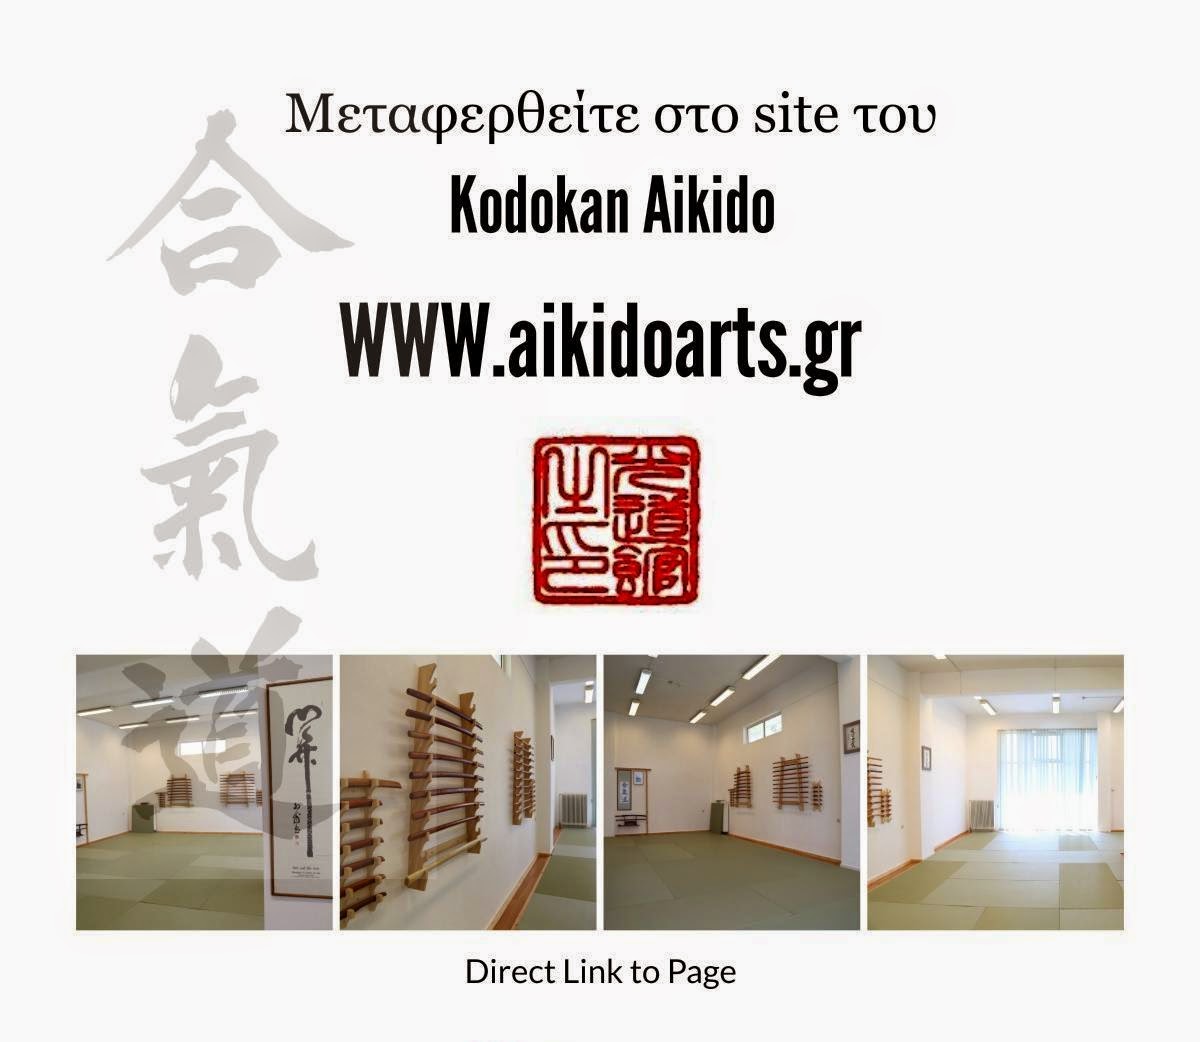  Kodokan Aikido Webpage